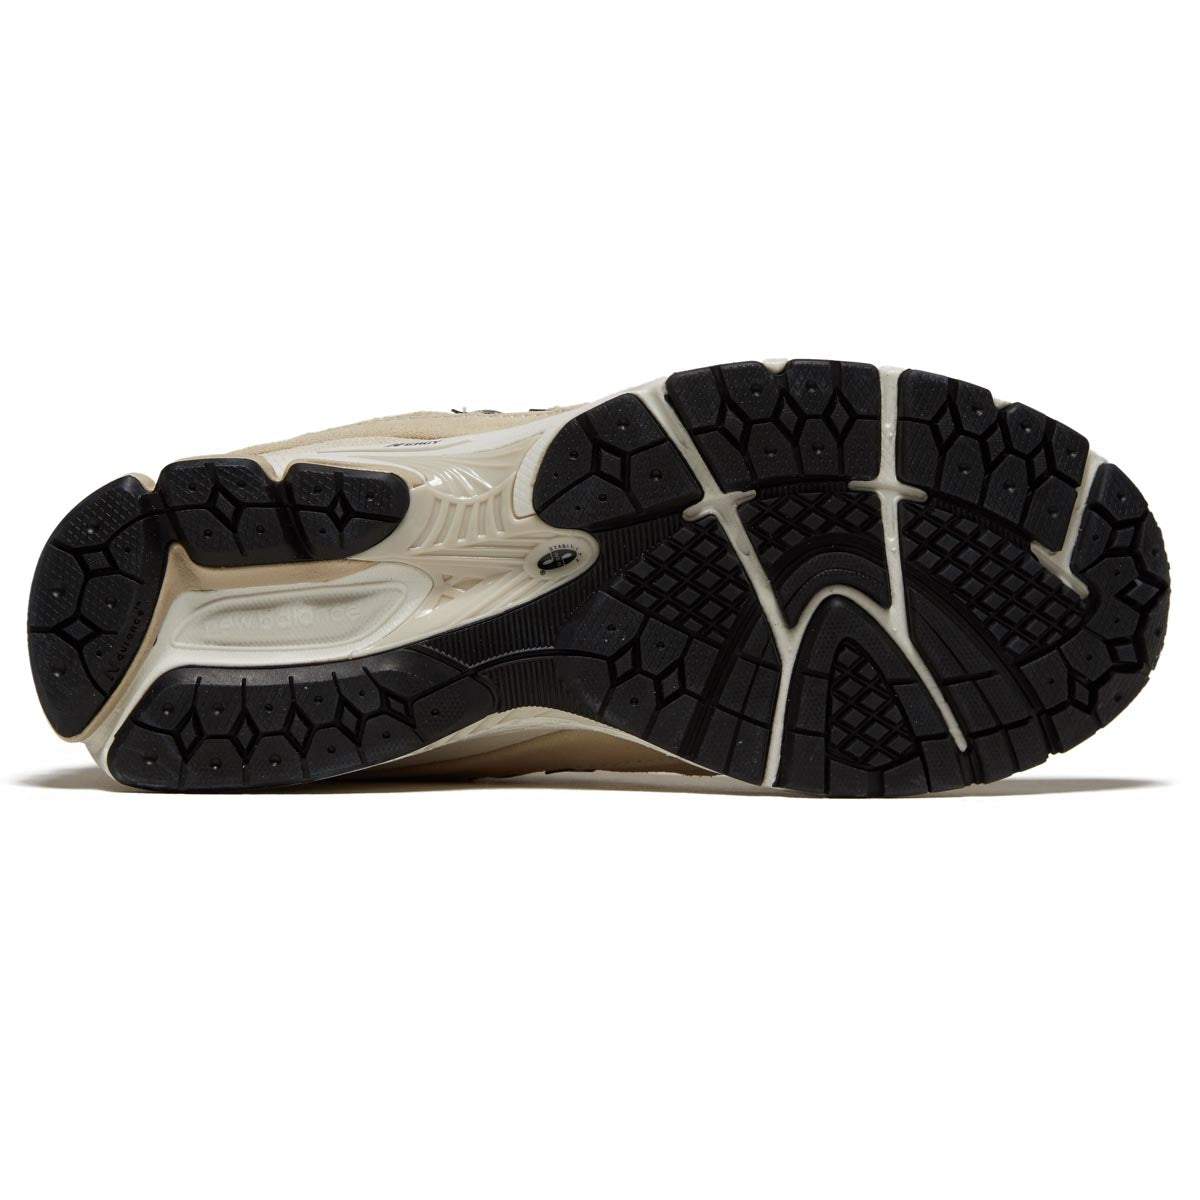 New Balance 2002R Shoes - Sandstone/Magnet/
Linen image 4